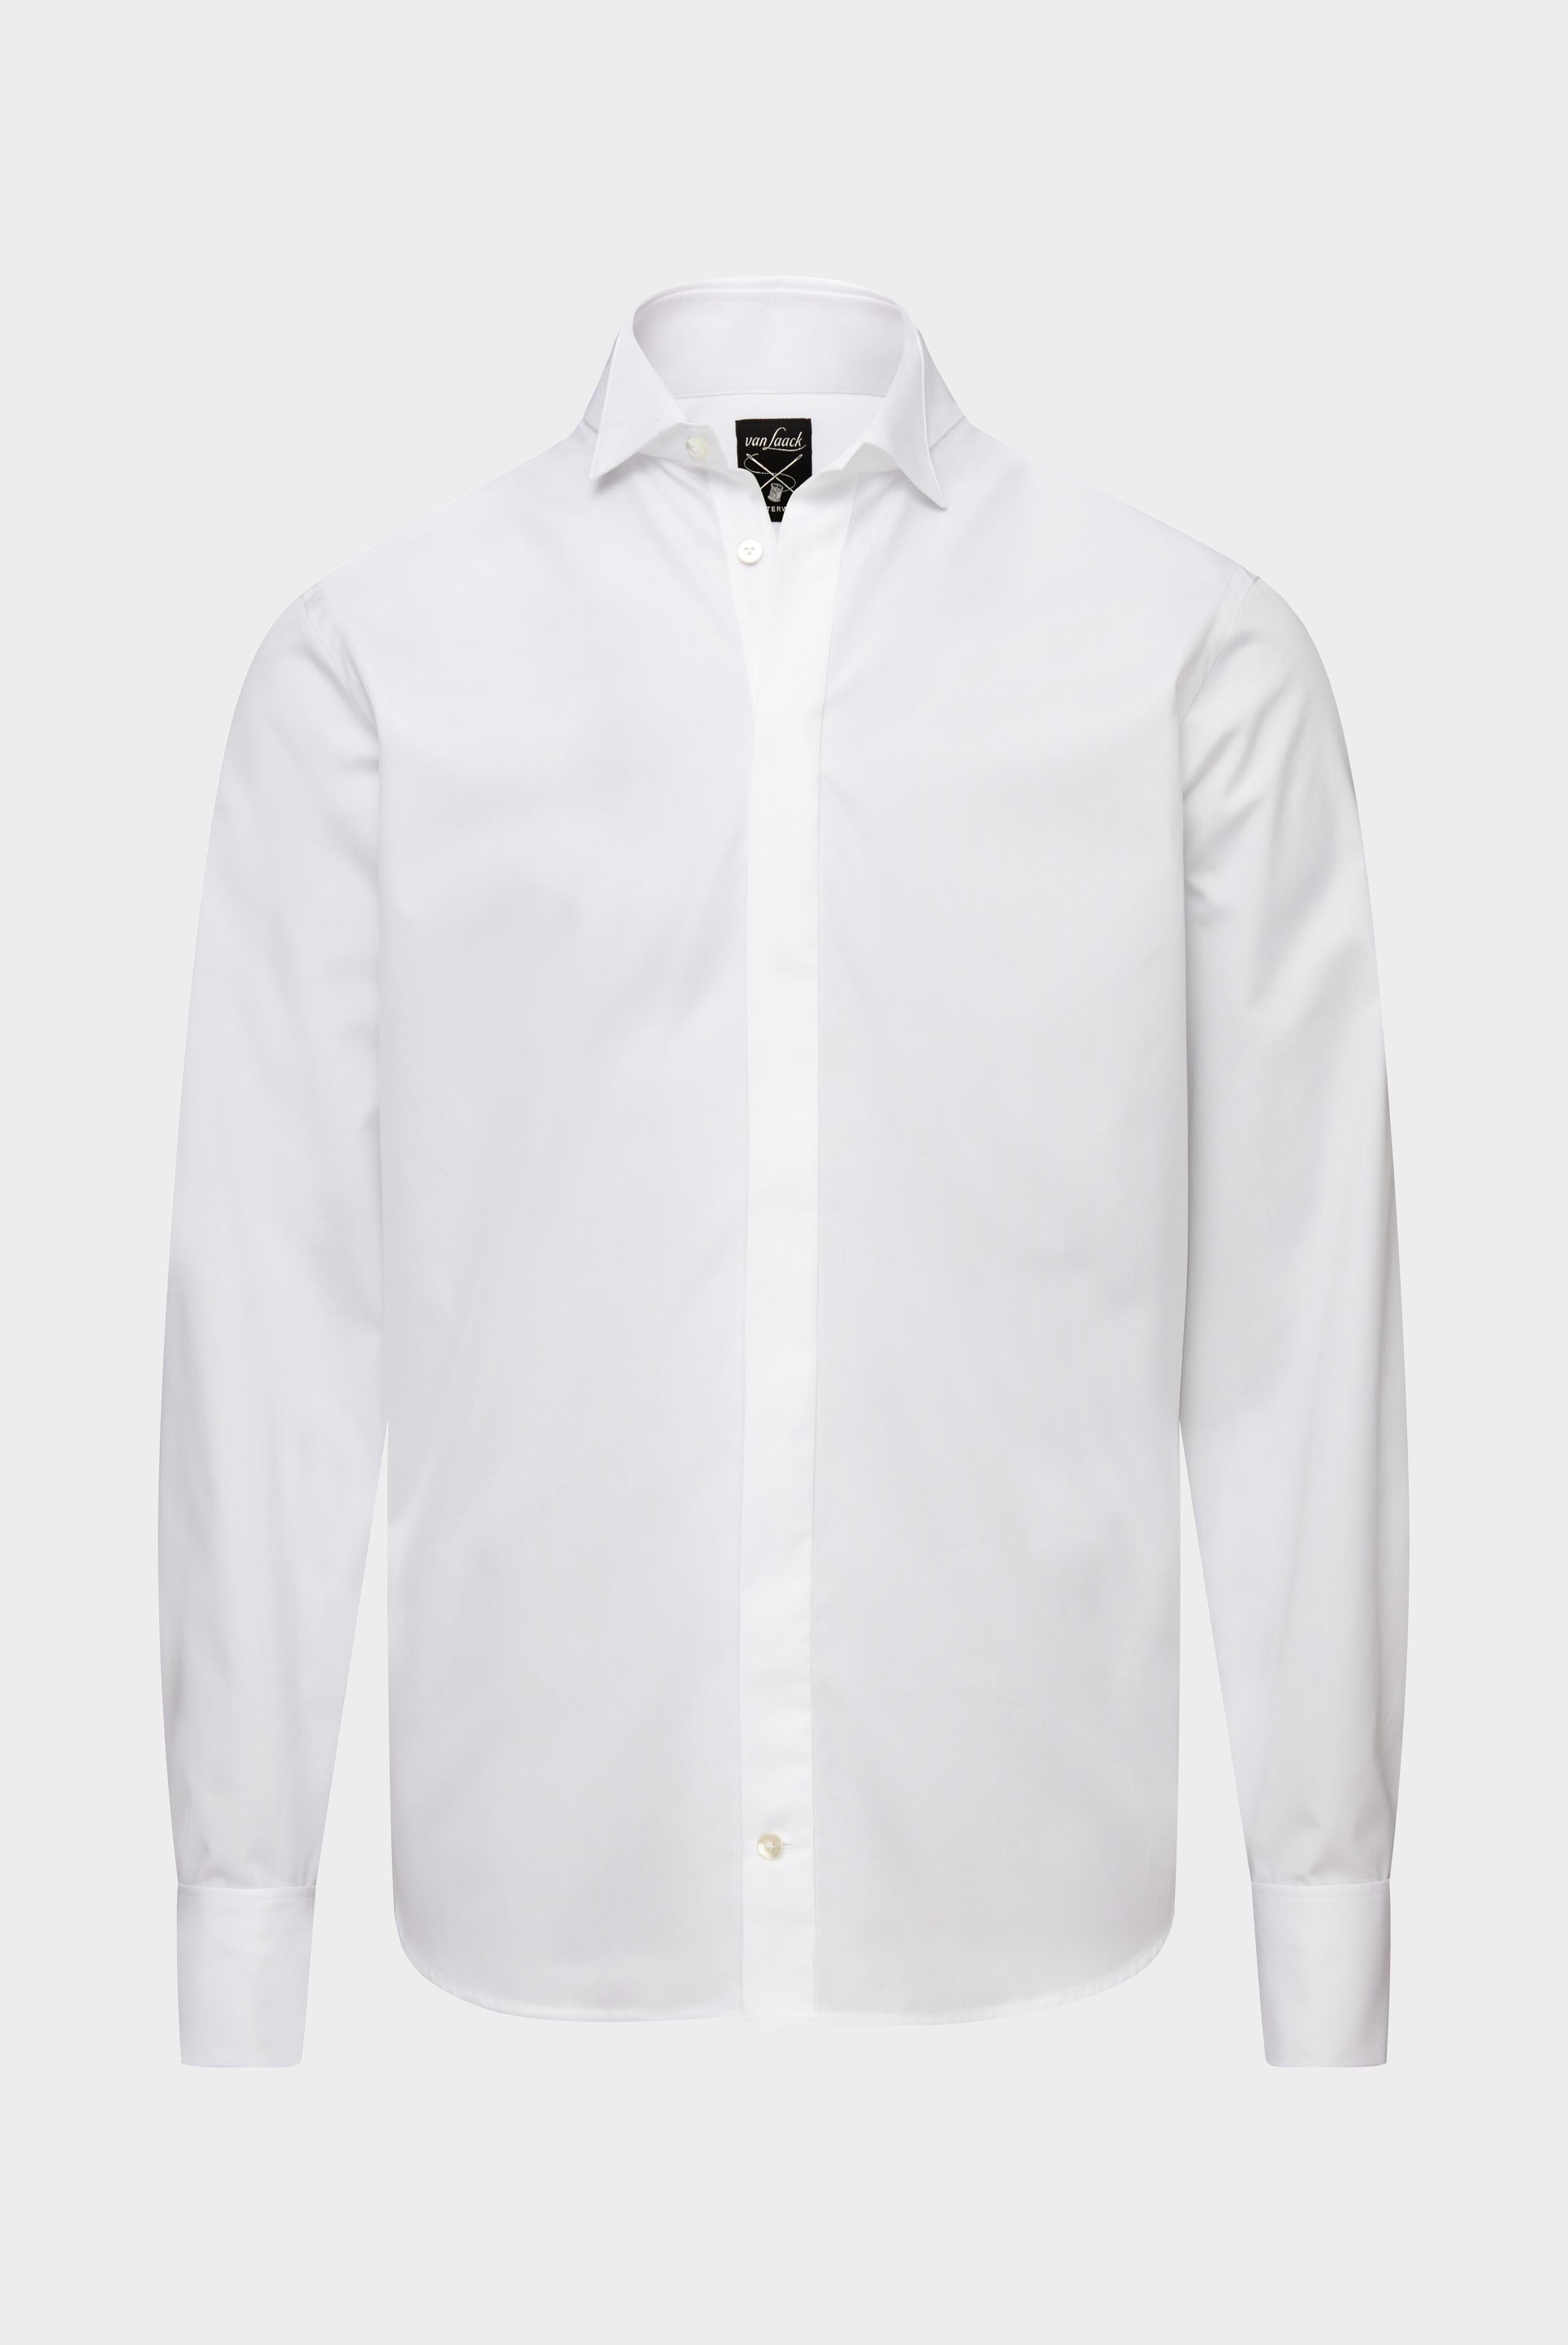 Festliche Hemden+Poplin Wing Collar Evening Shirt+20.2060.NV.130648.000.37